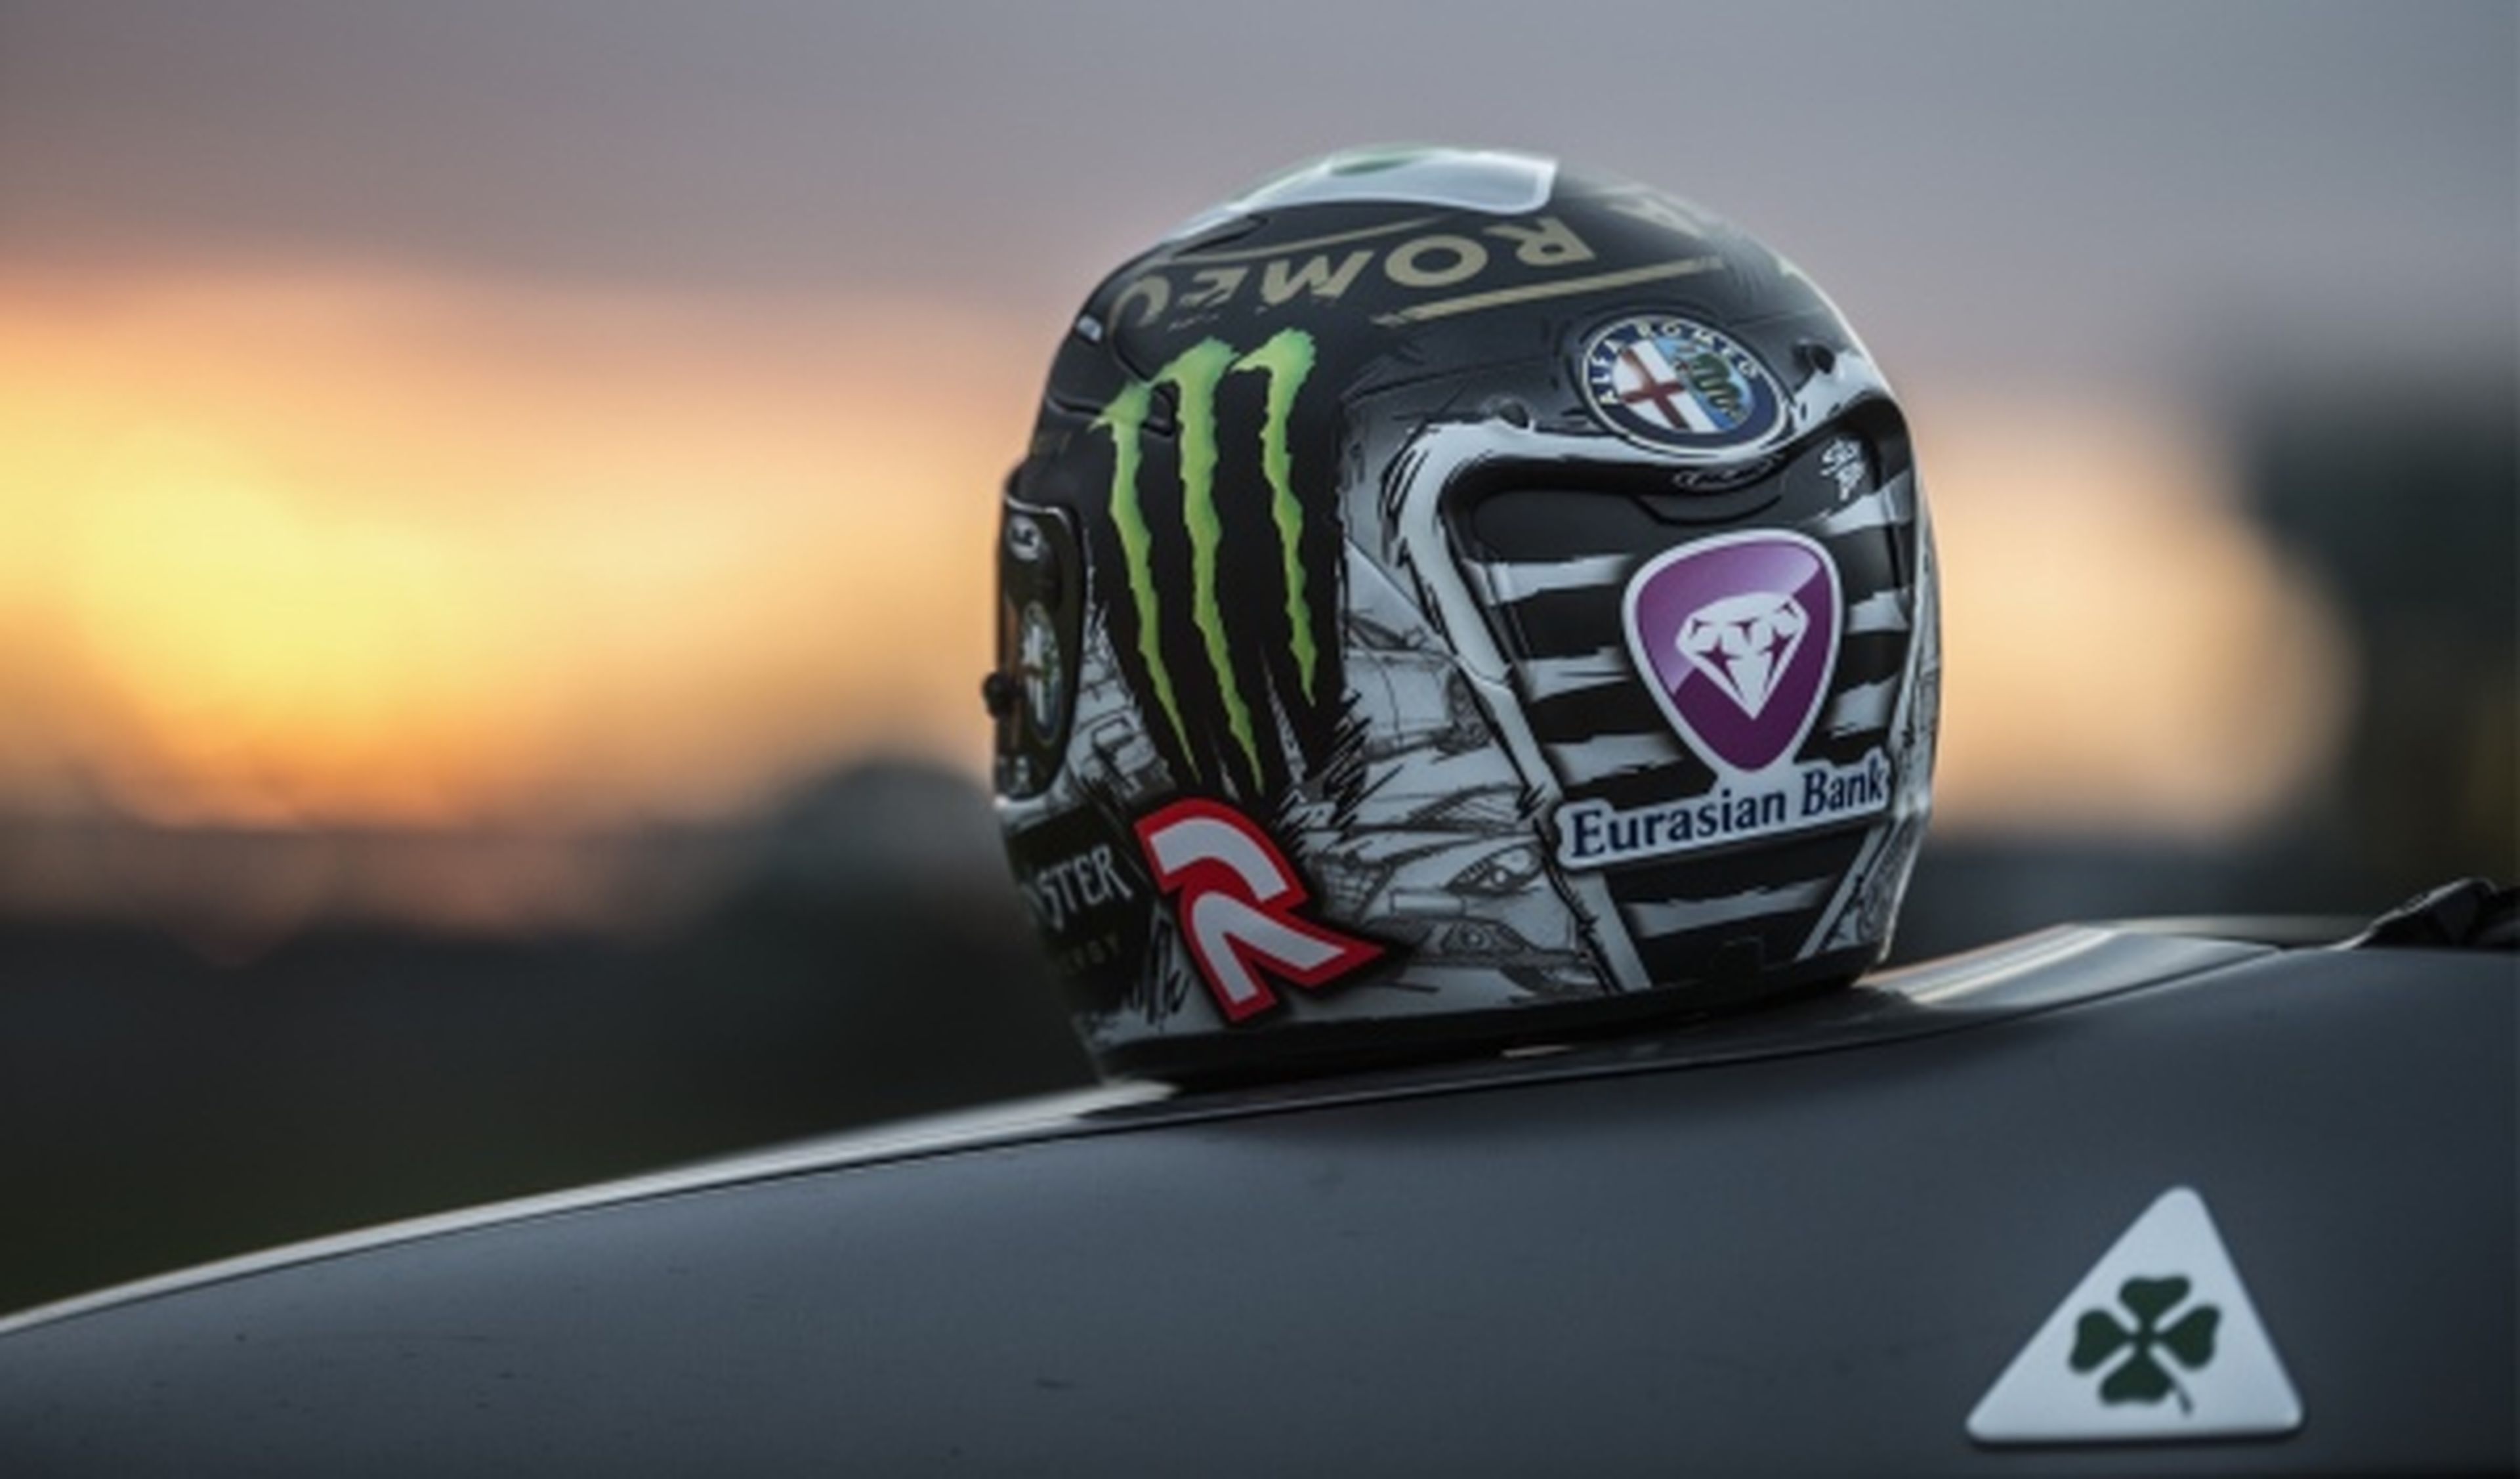 Nuevo casco especial de Jorge Lorenzo para Silverstone